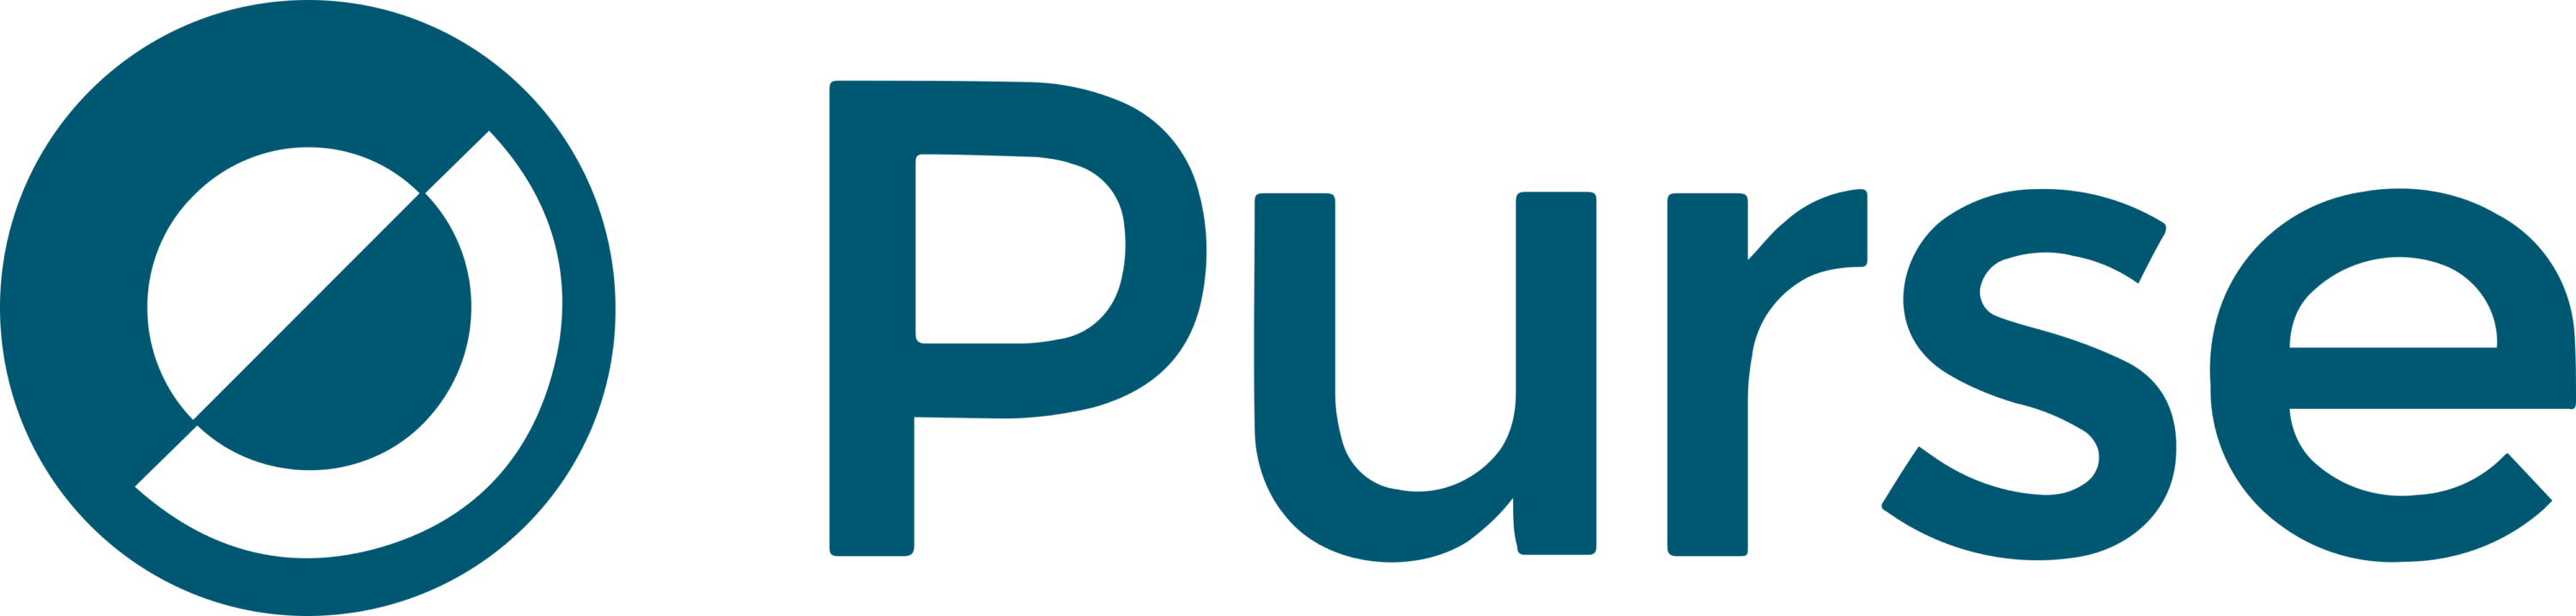 Purse Logo